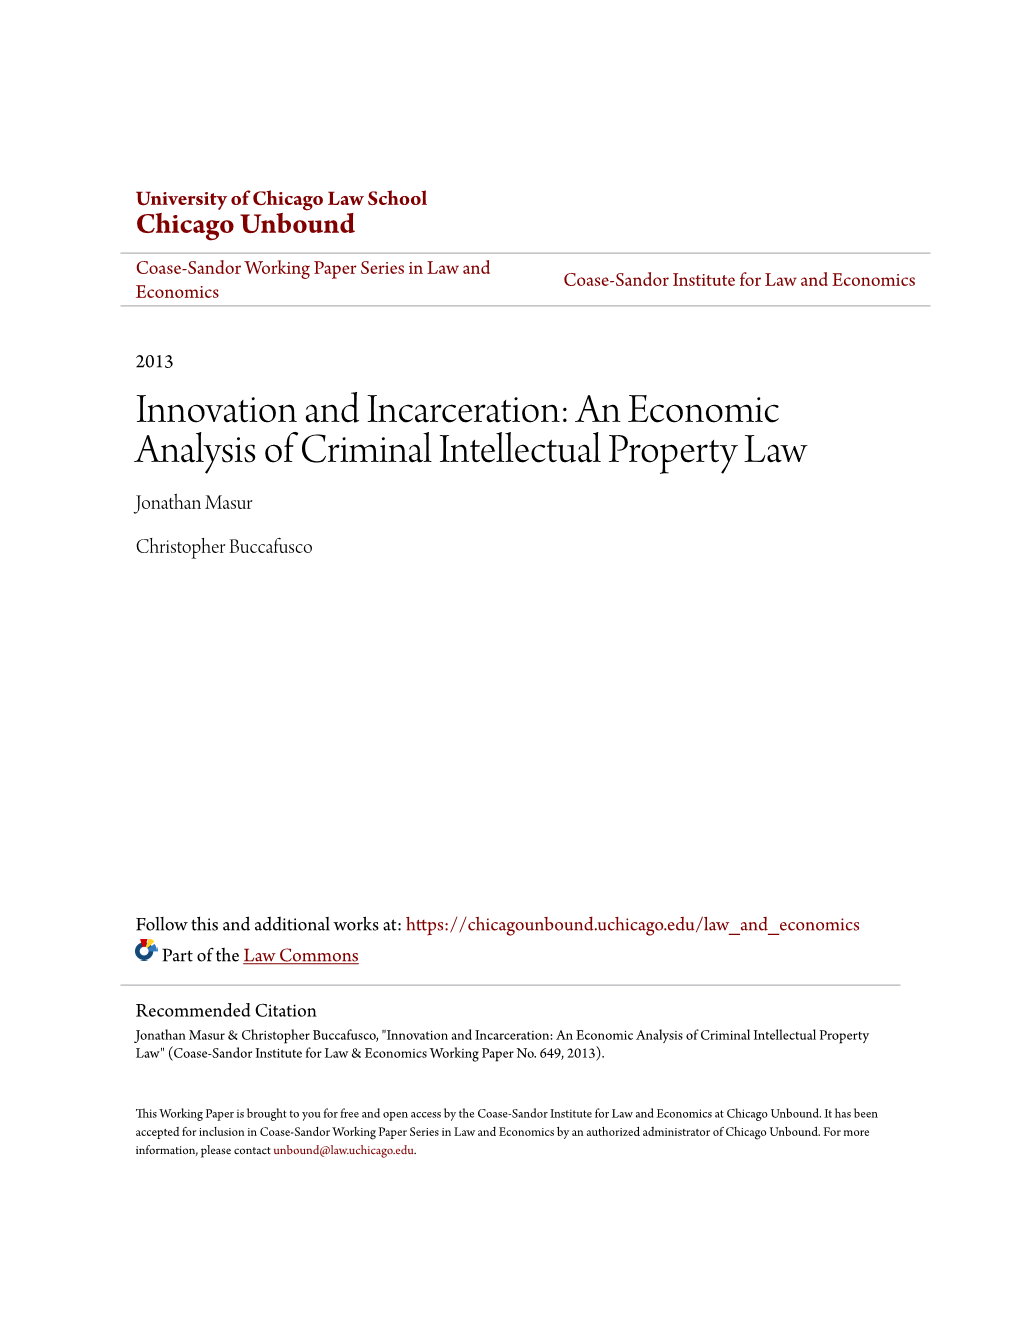 An Economic Analysis of Criminal Intellectual Property Law Jonathan Masur